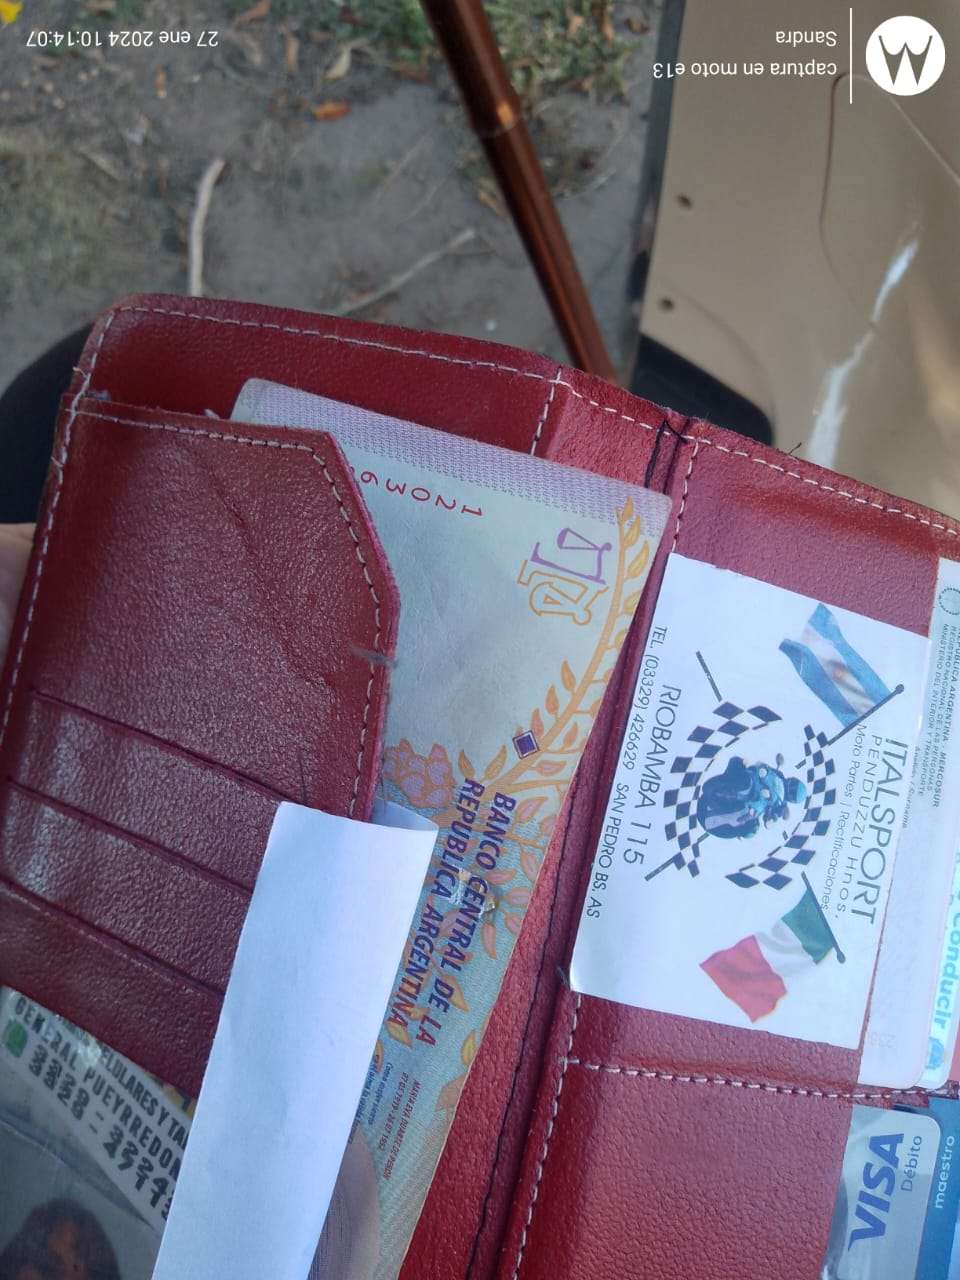 200 pesos en la billetera